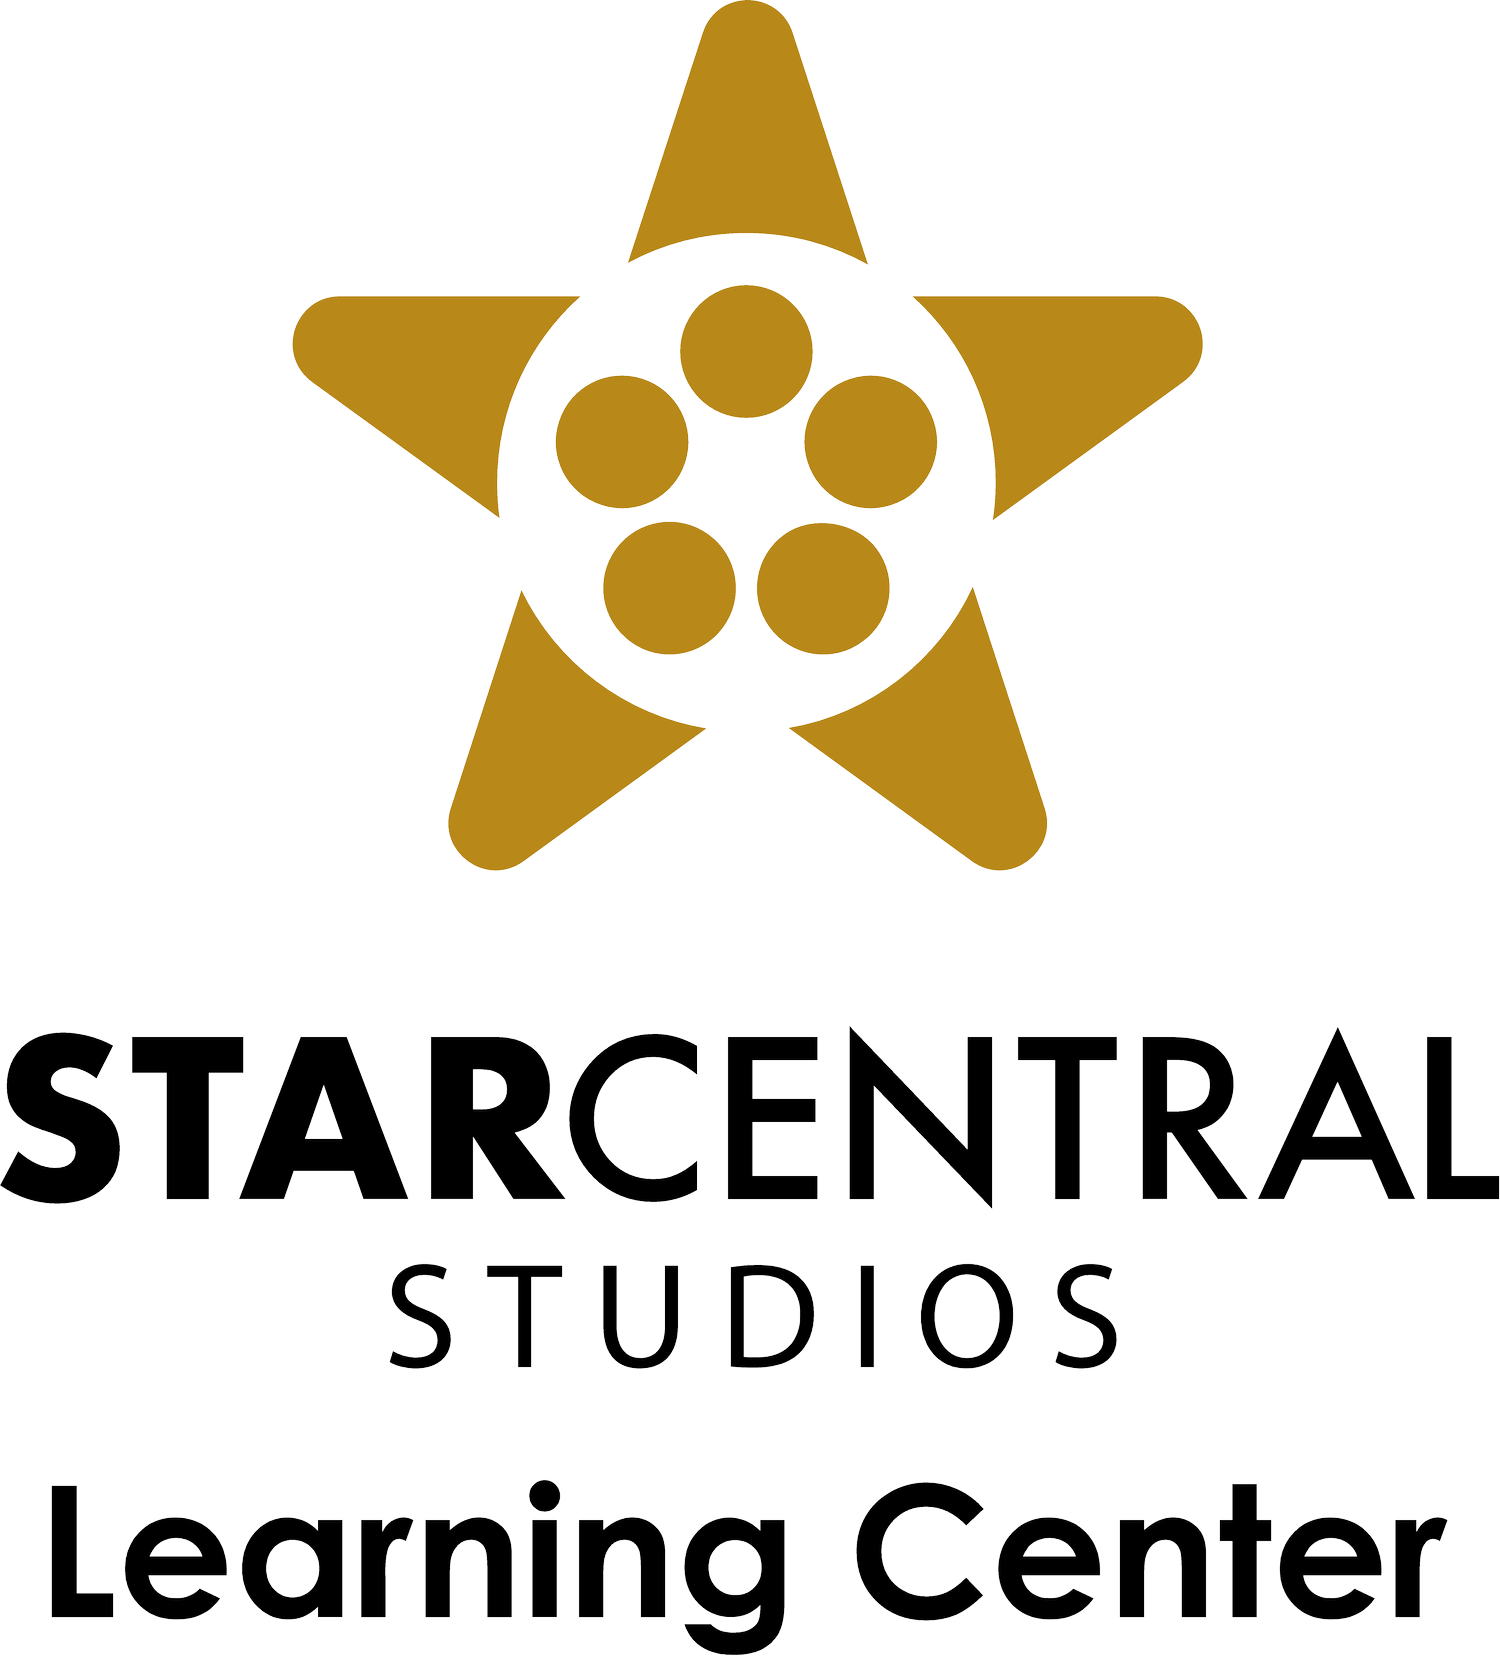 Star Central Studios Learning Center  